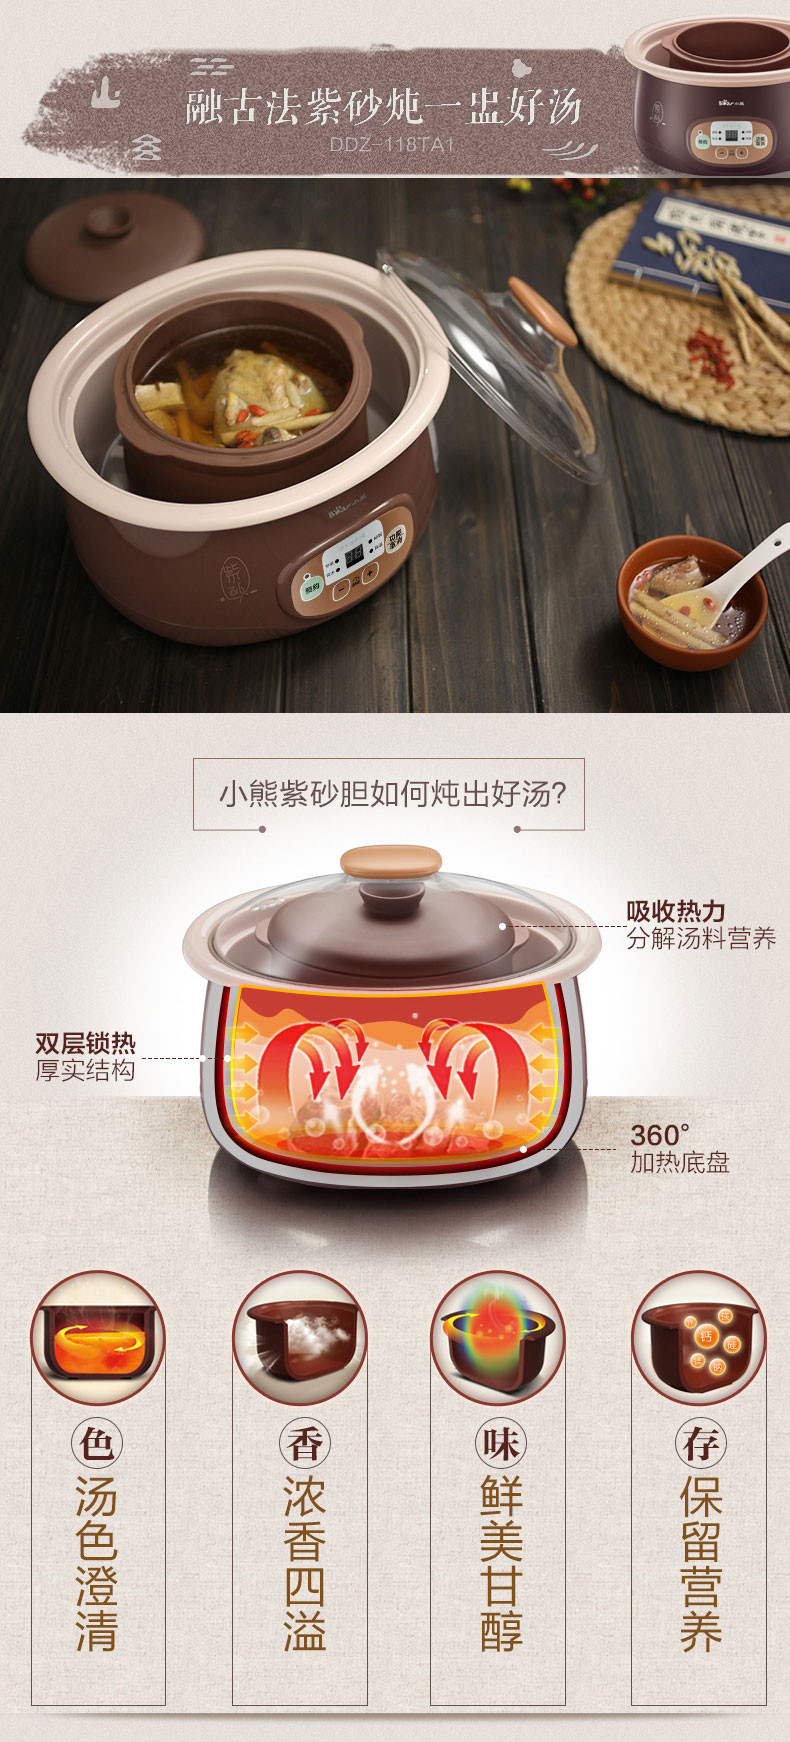 Bear/小熊 DDZ-118TA1紫砂锅电炖盅隔水炖汤全自动预约陶瓷煲汤锅